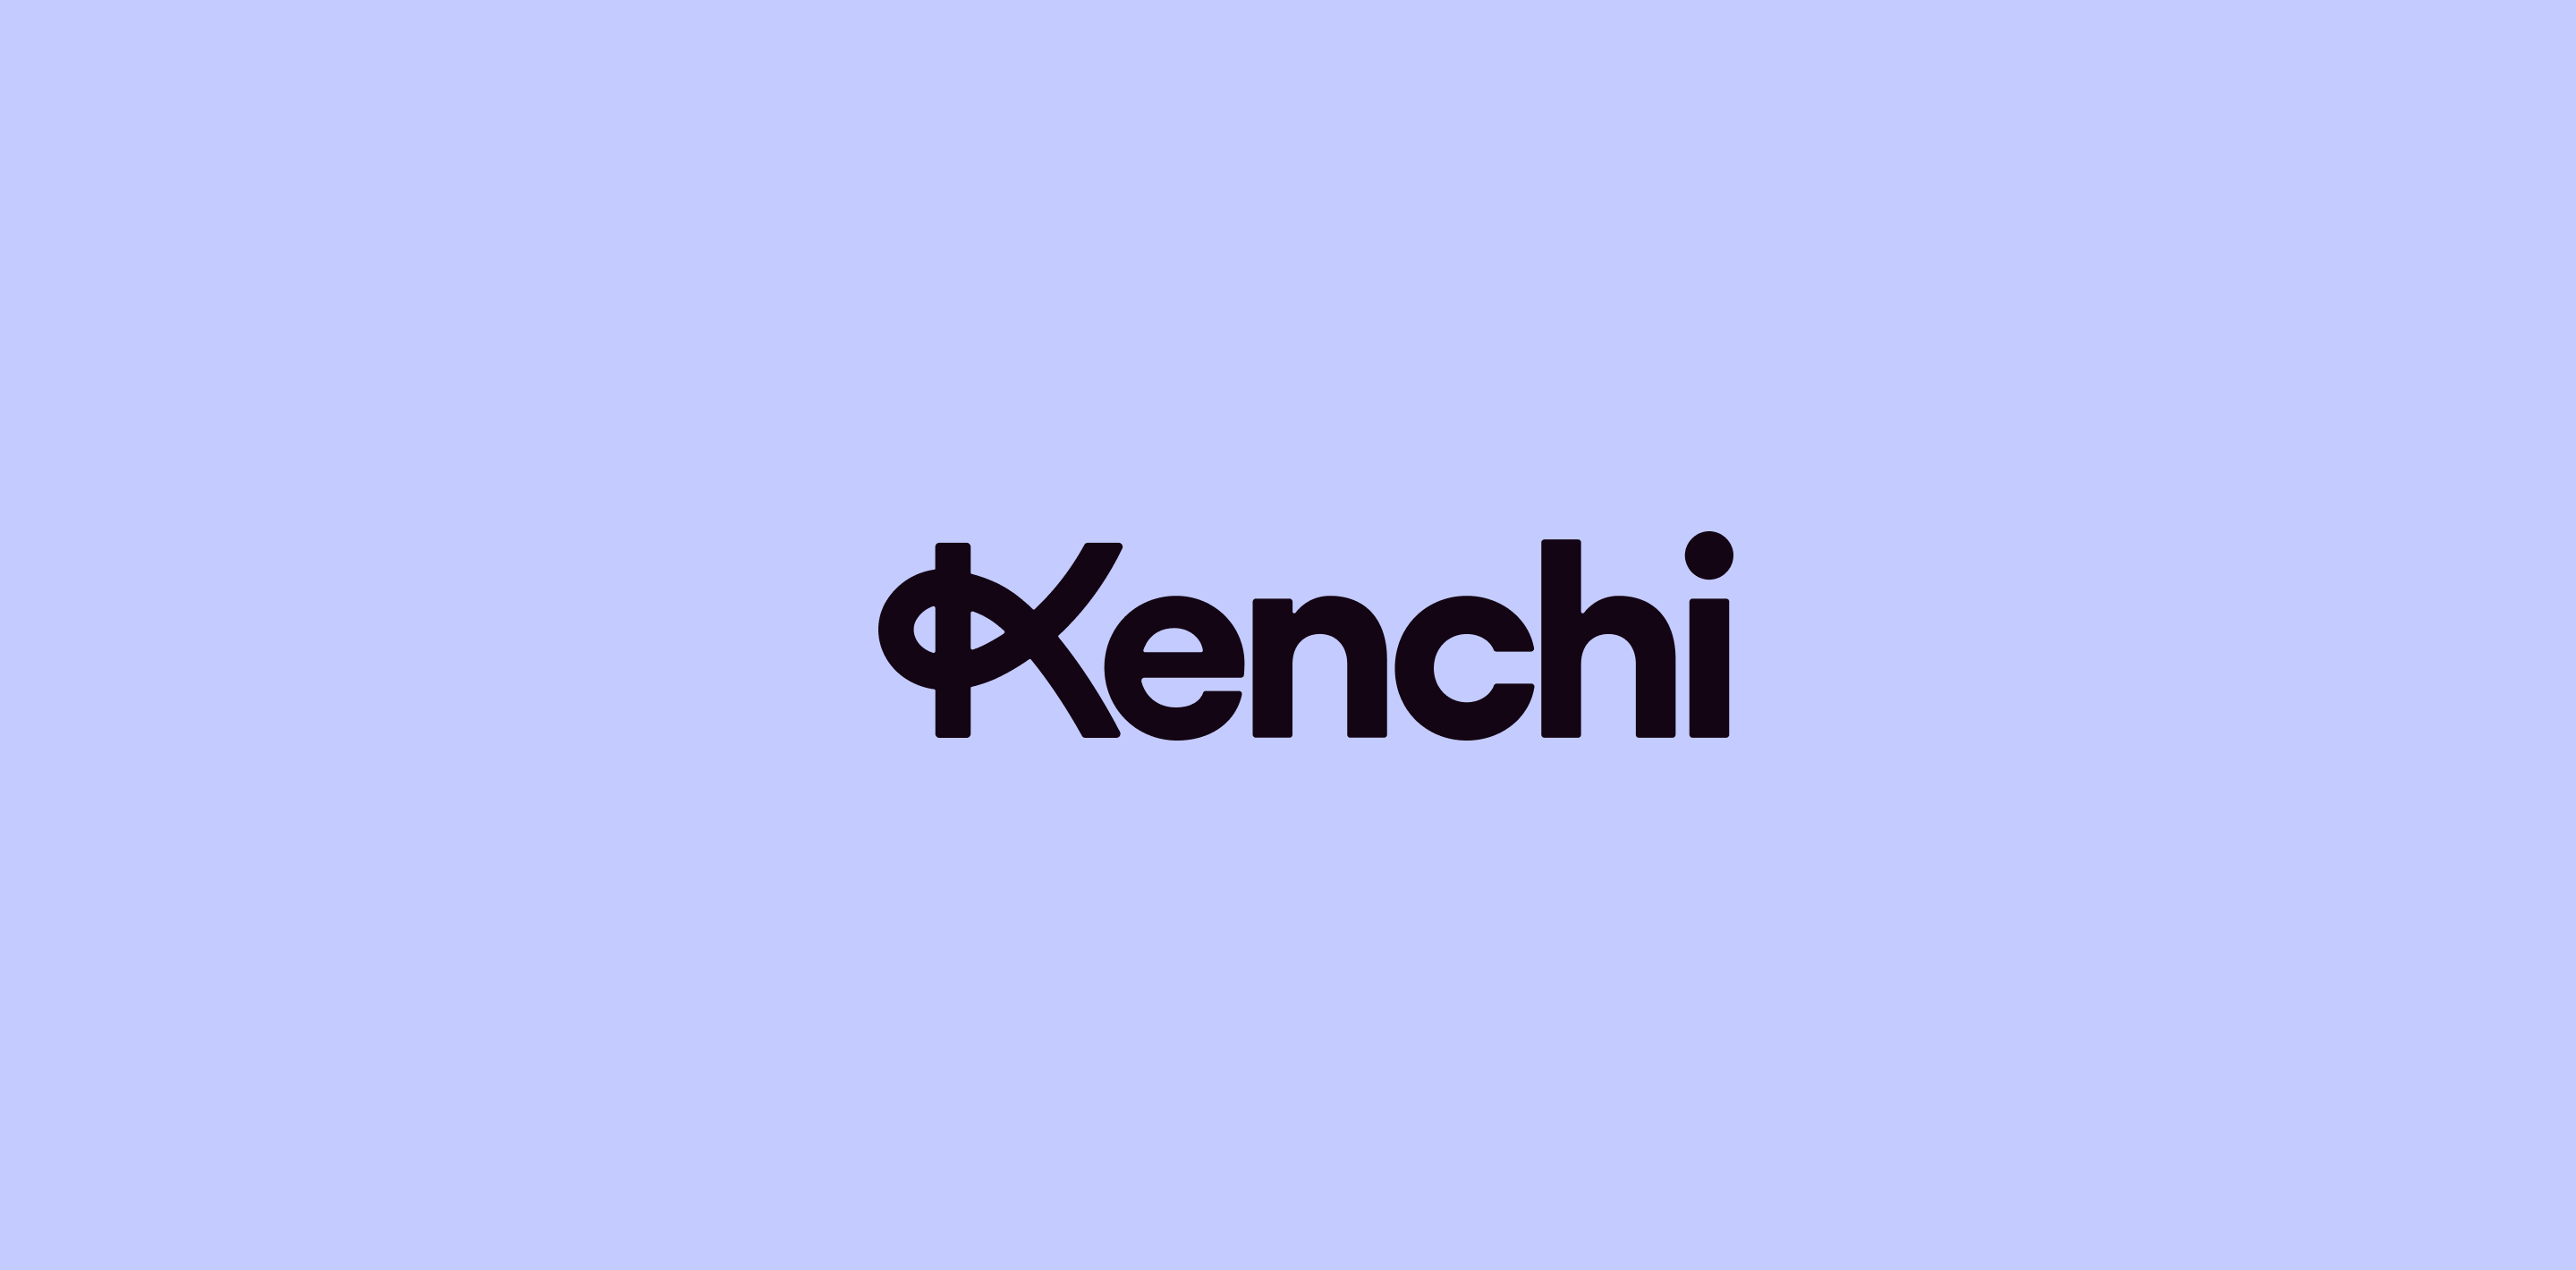 Kenchi brand design 2